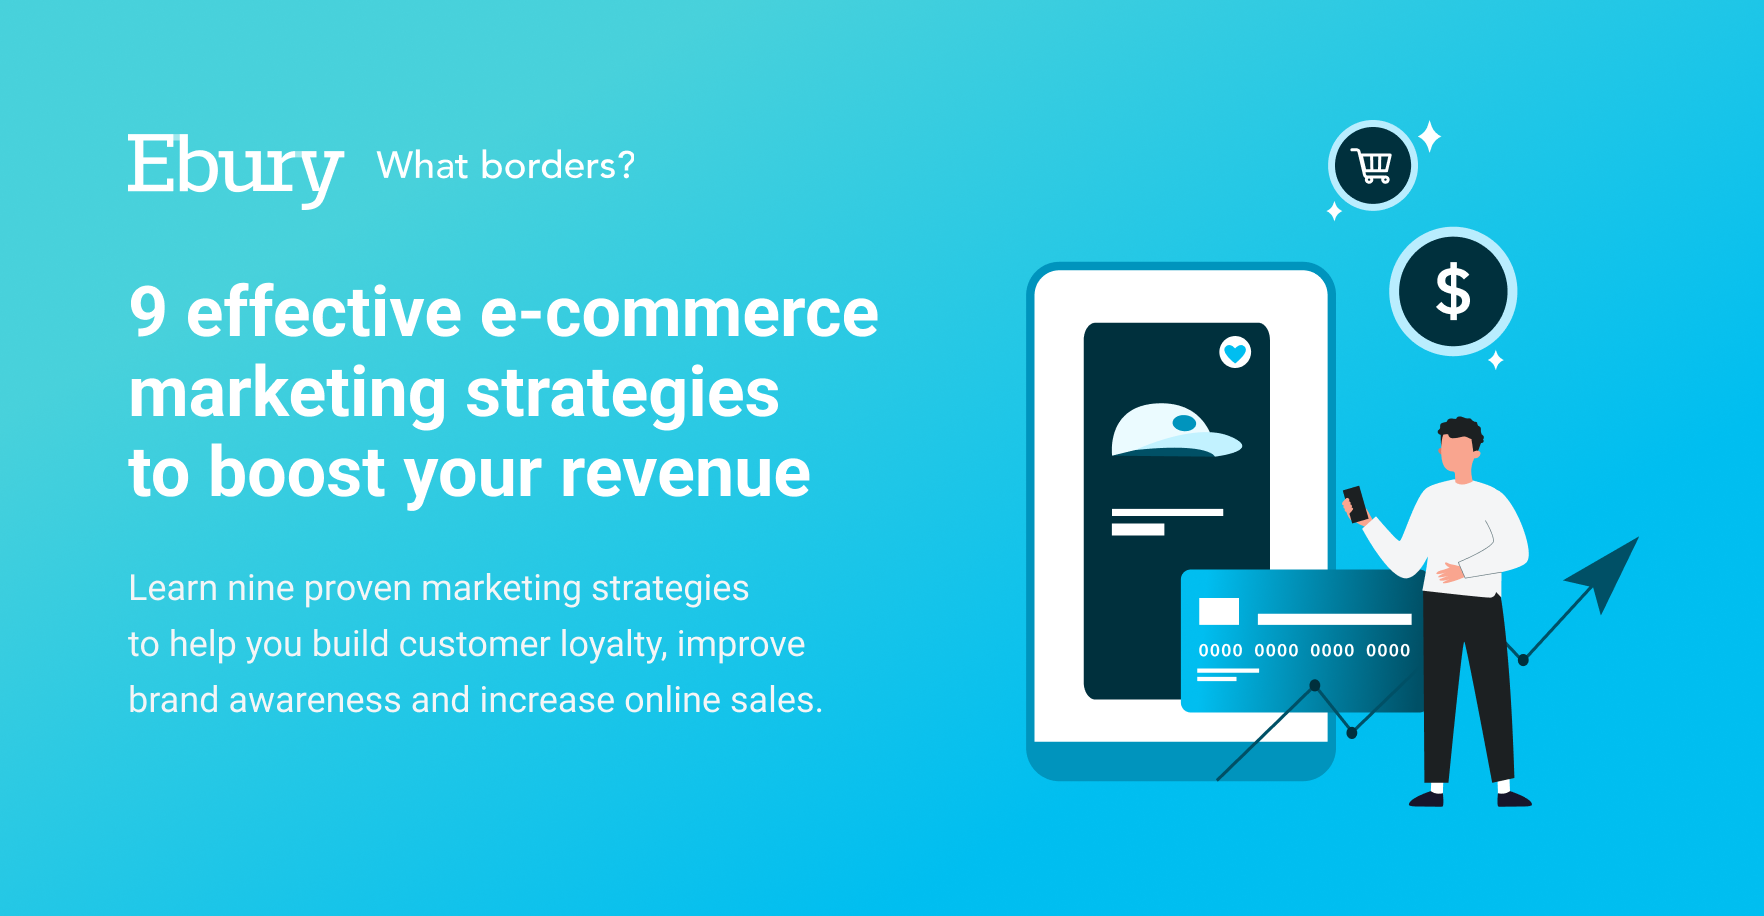 Marketing strategies for e-commerce